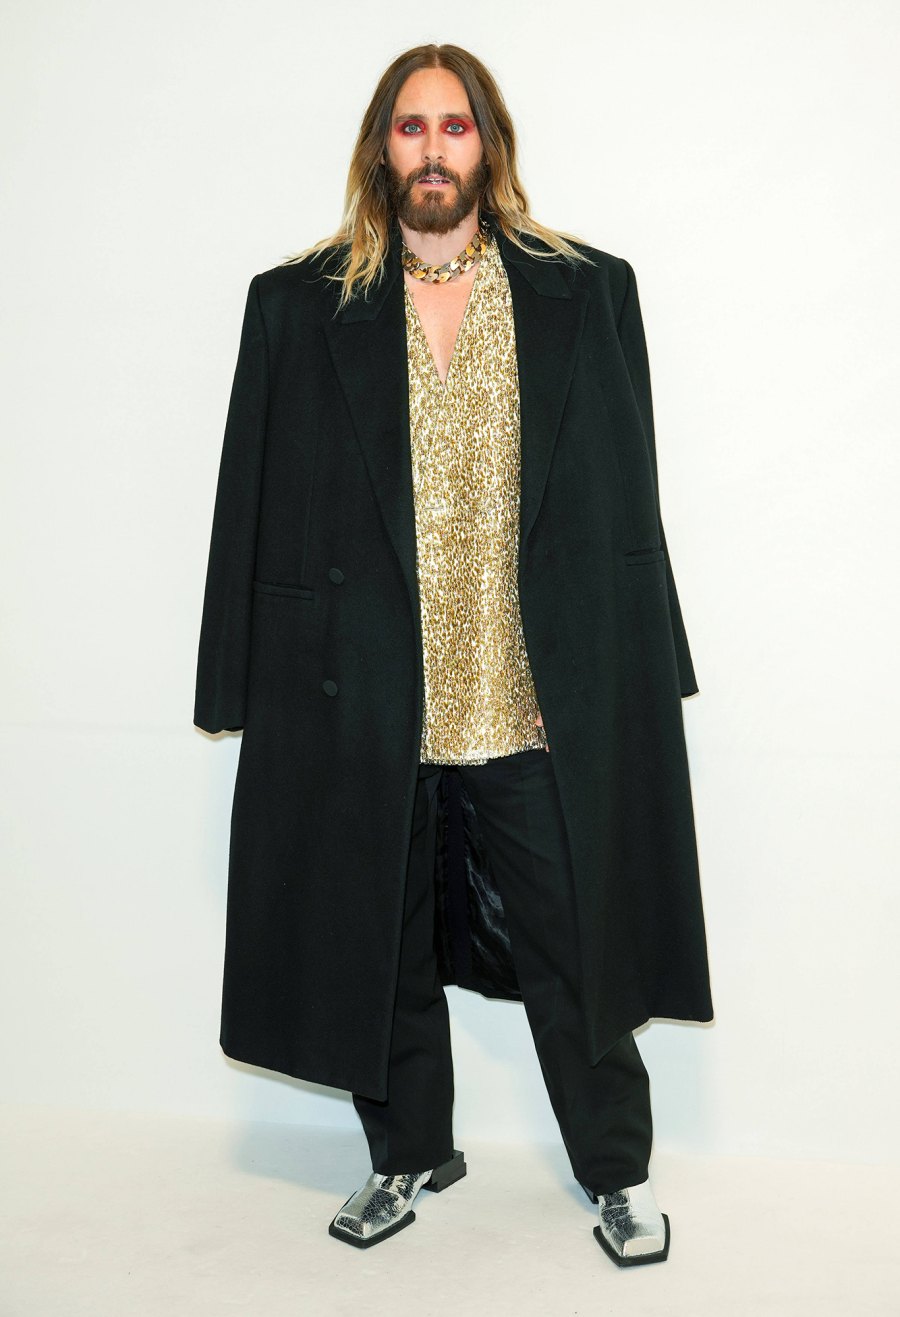 Paris Fashion Week: Jared Leto Wears Striking Red Makeup to Givenchy, More